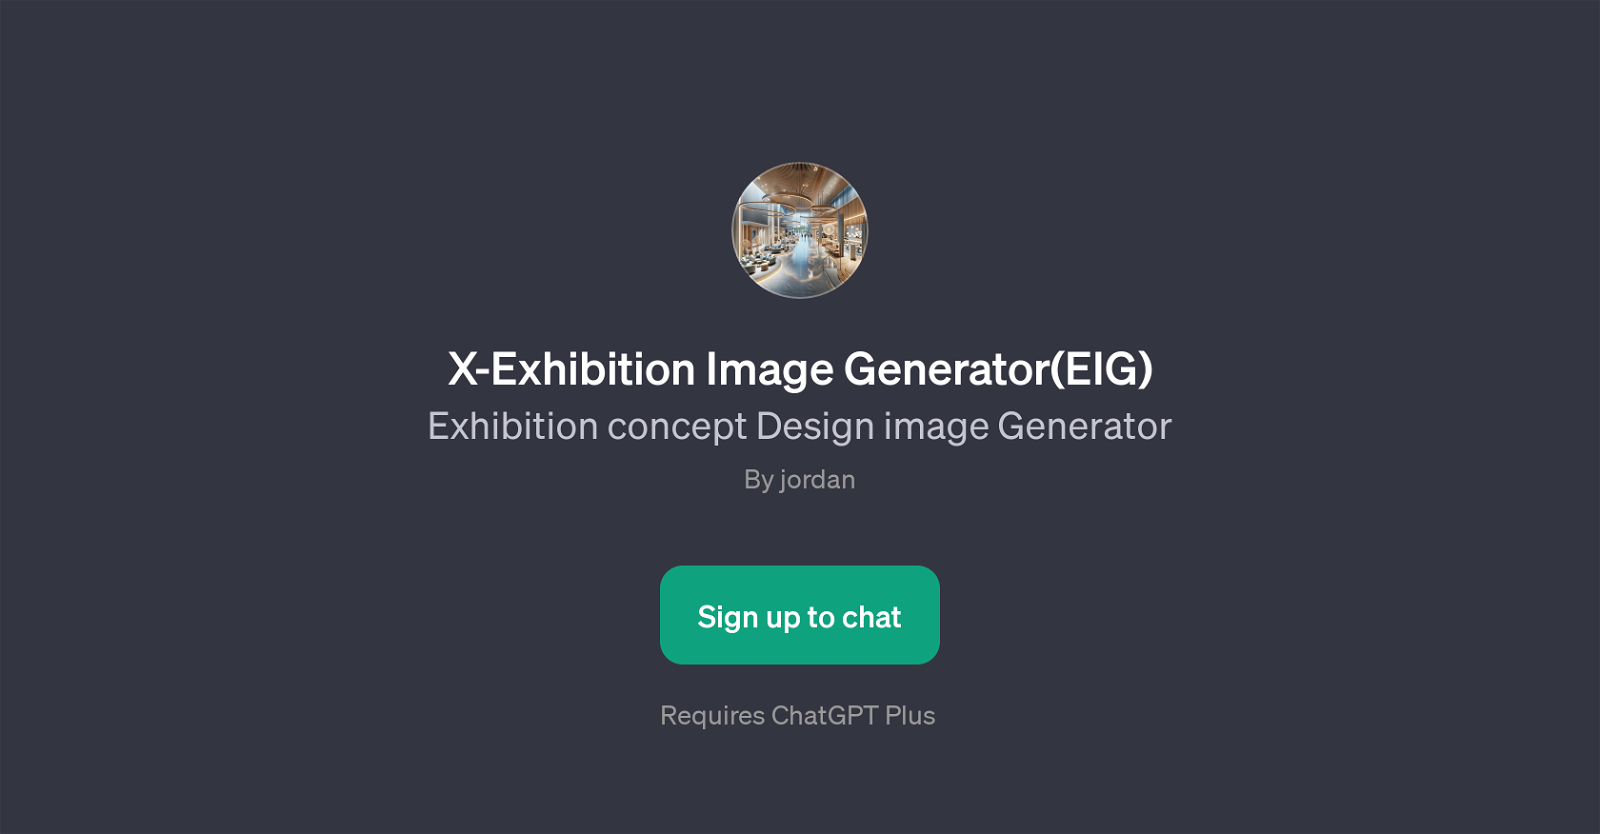 X-Exhibition Image Generator (EIG) website